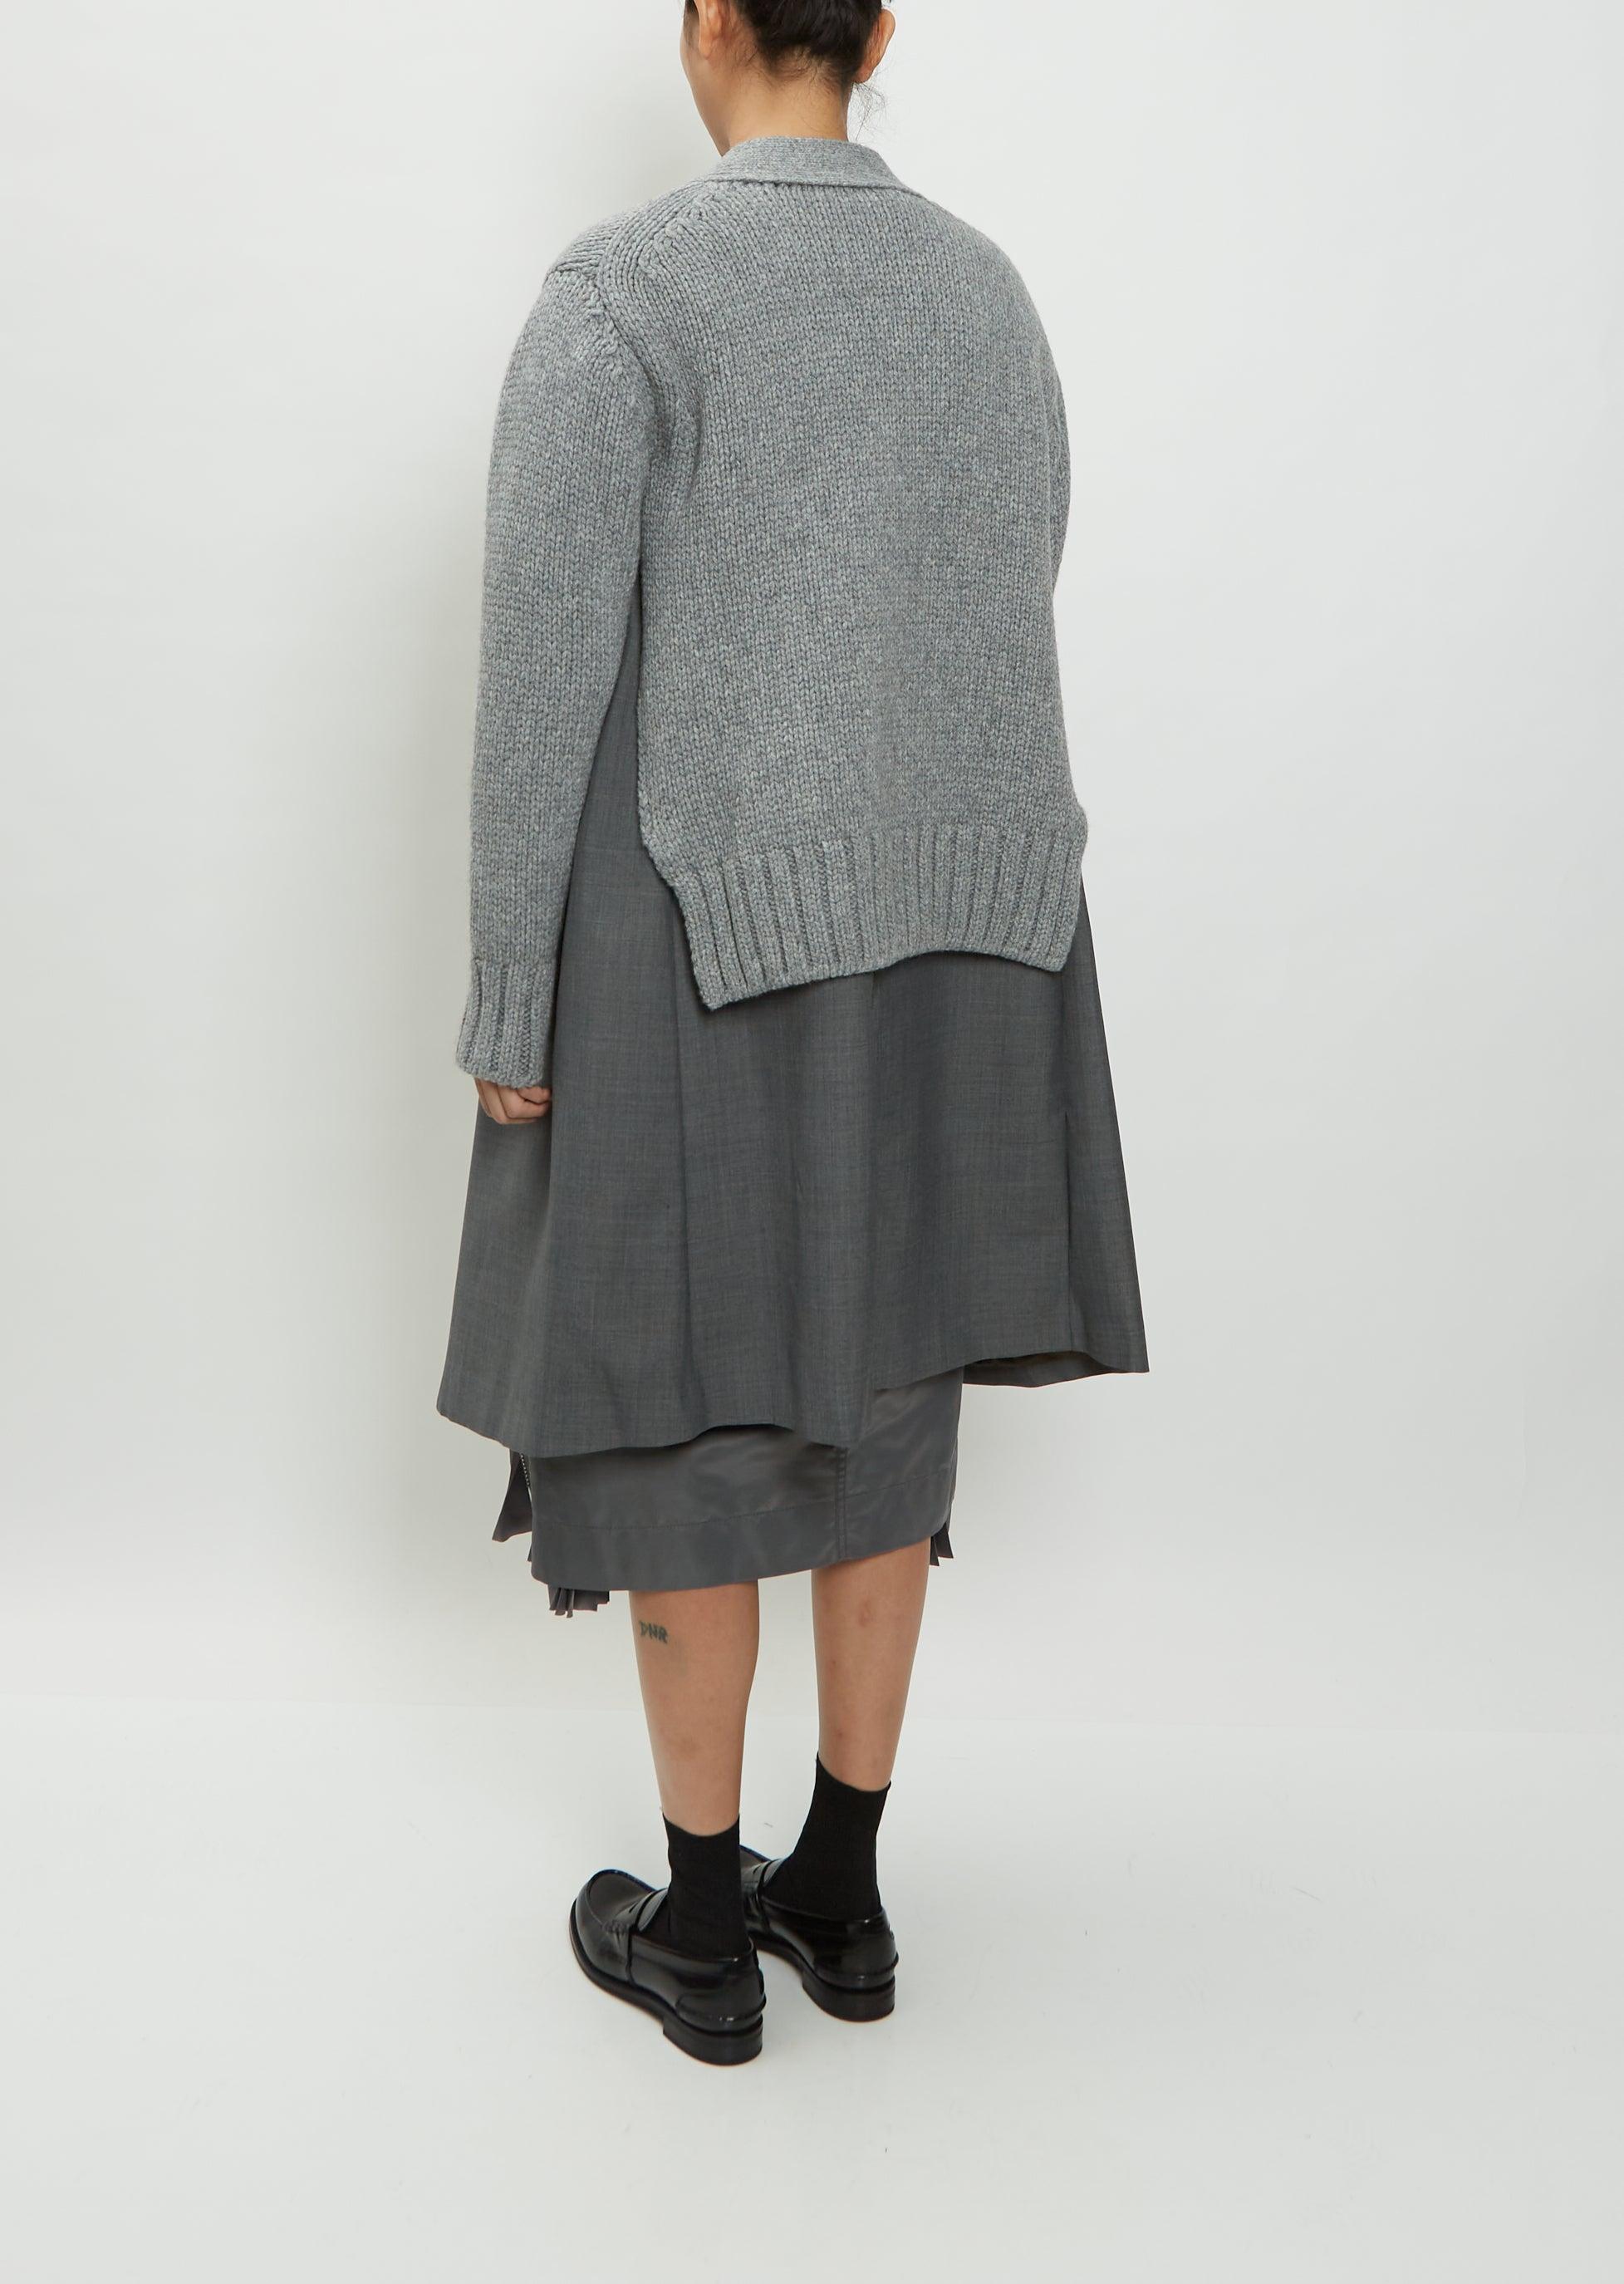 Sacai Women's Gray Wool Suiting X Knit Cardigan